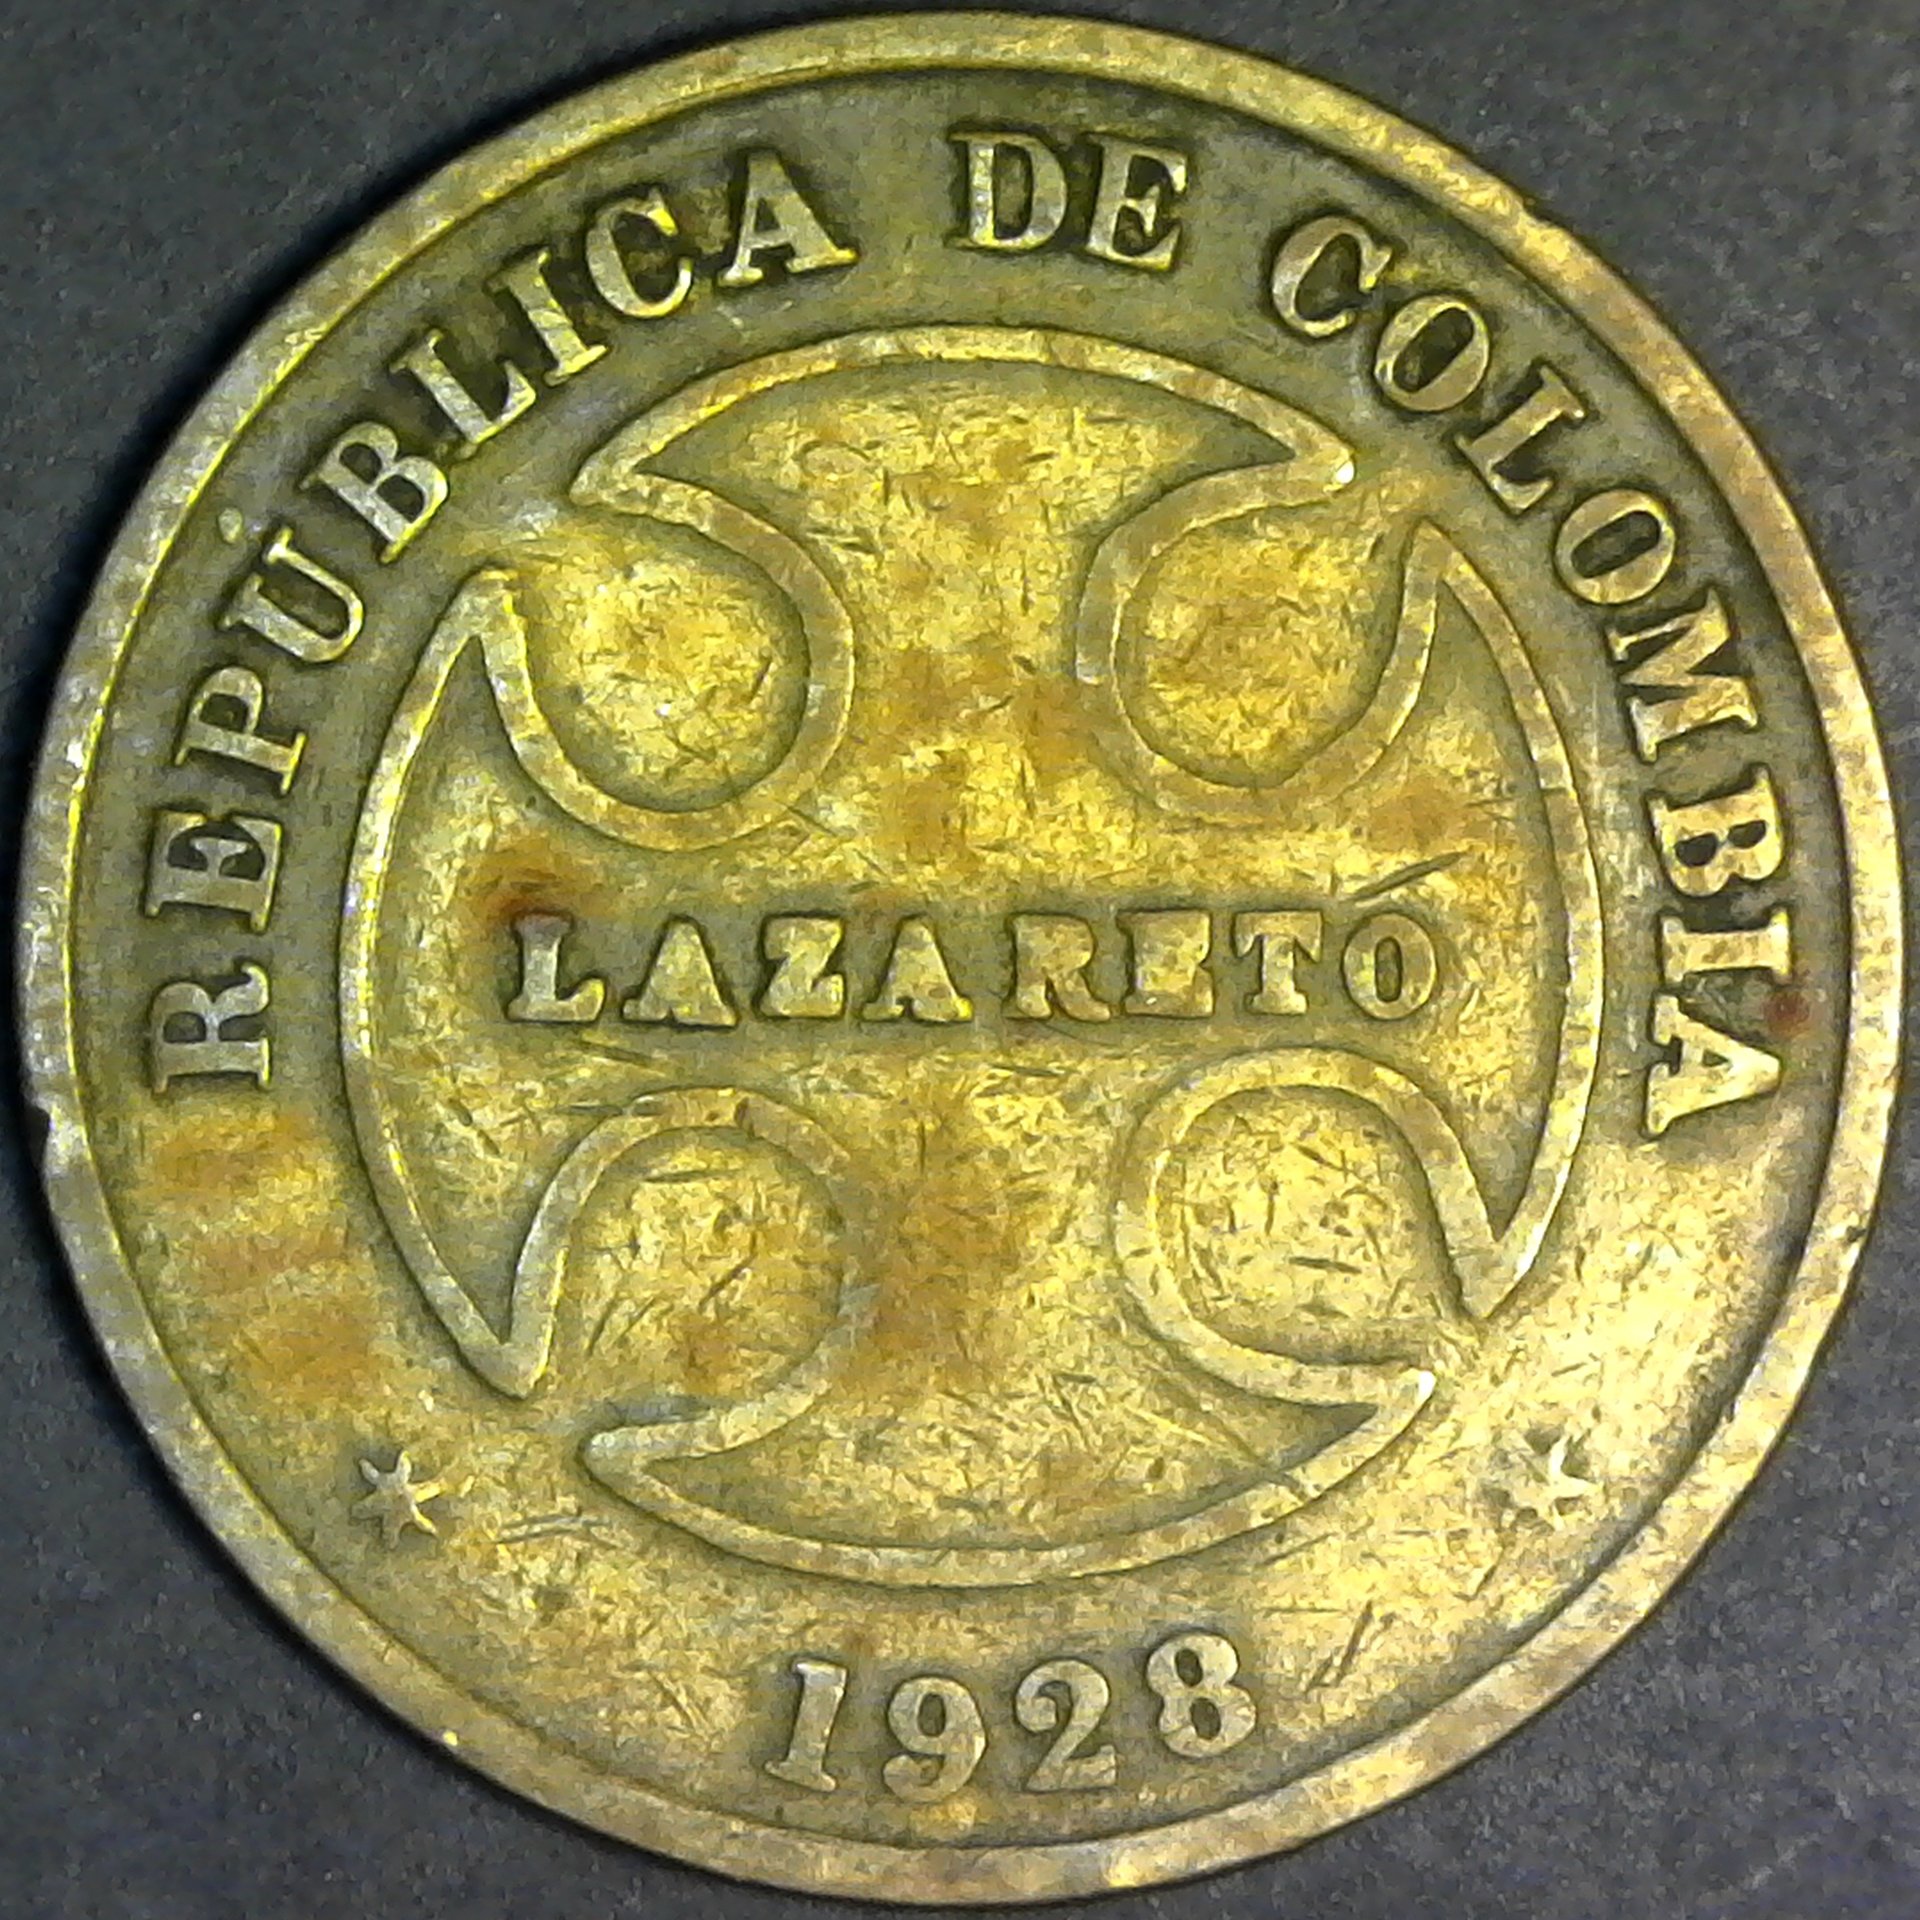 Colombia Lazareto 50 Centavos 1928 obv.jpg